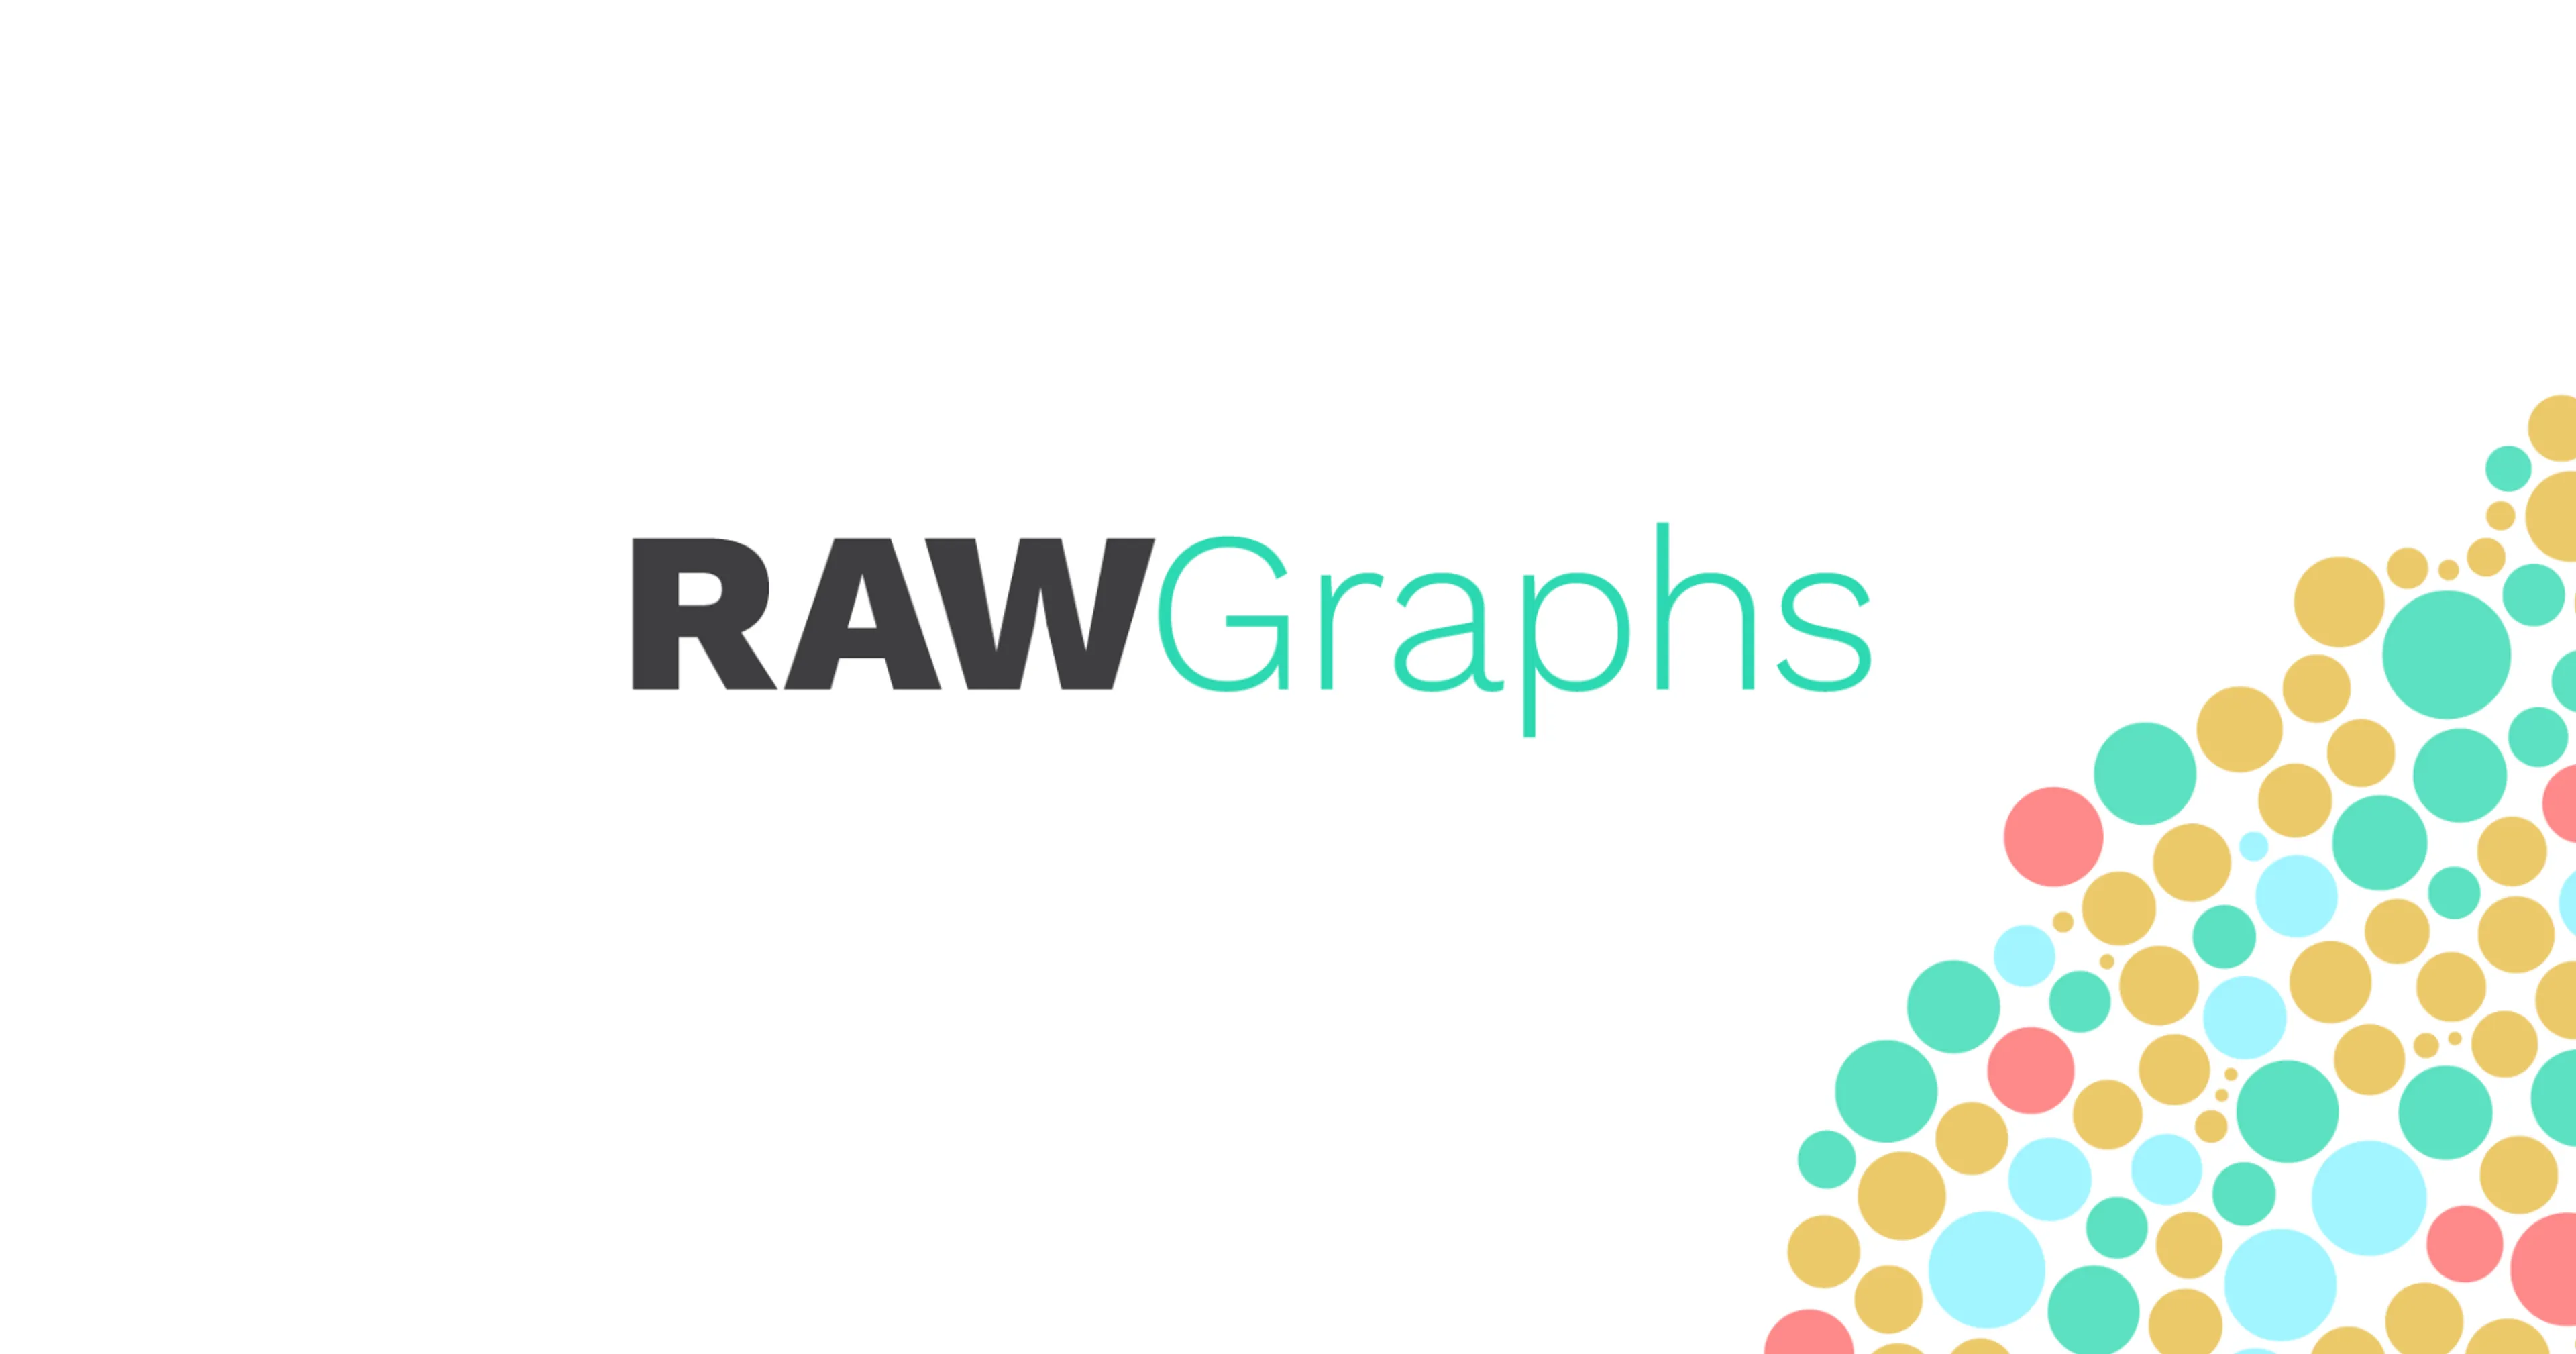 RAWGraphs 2.0